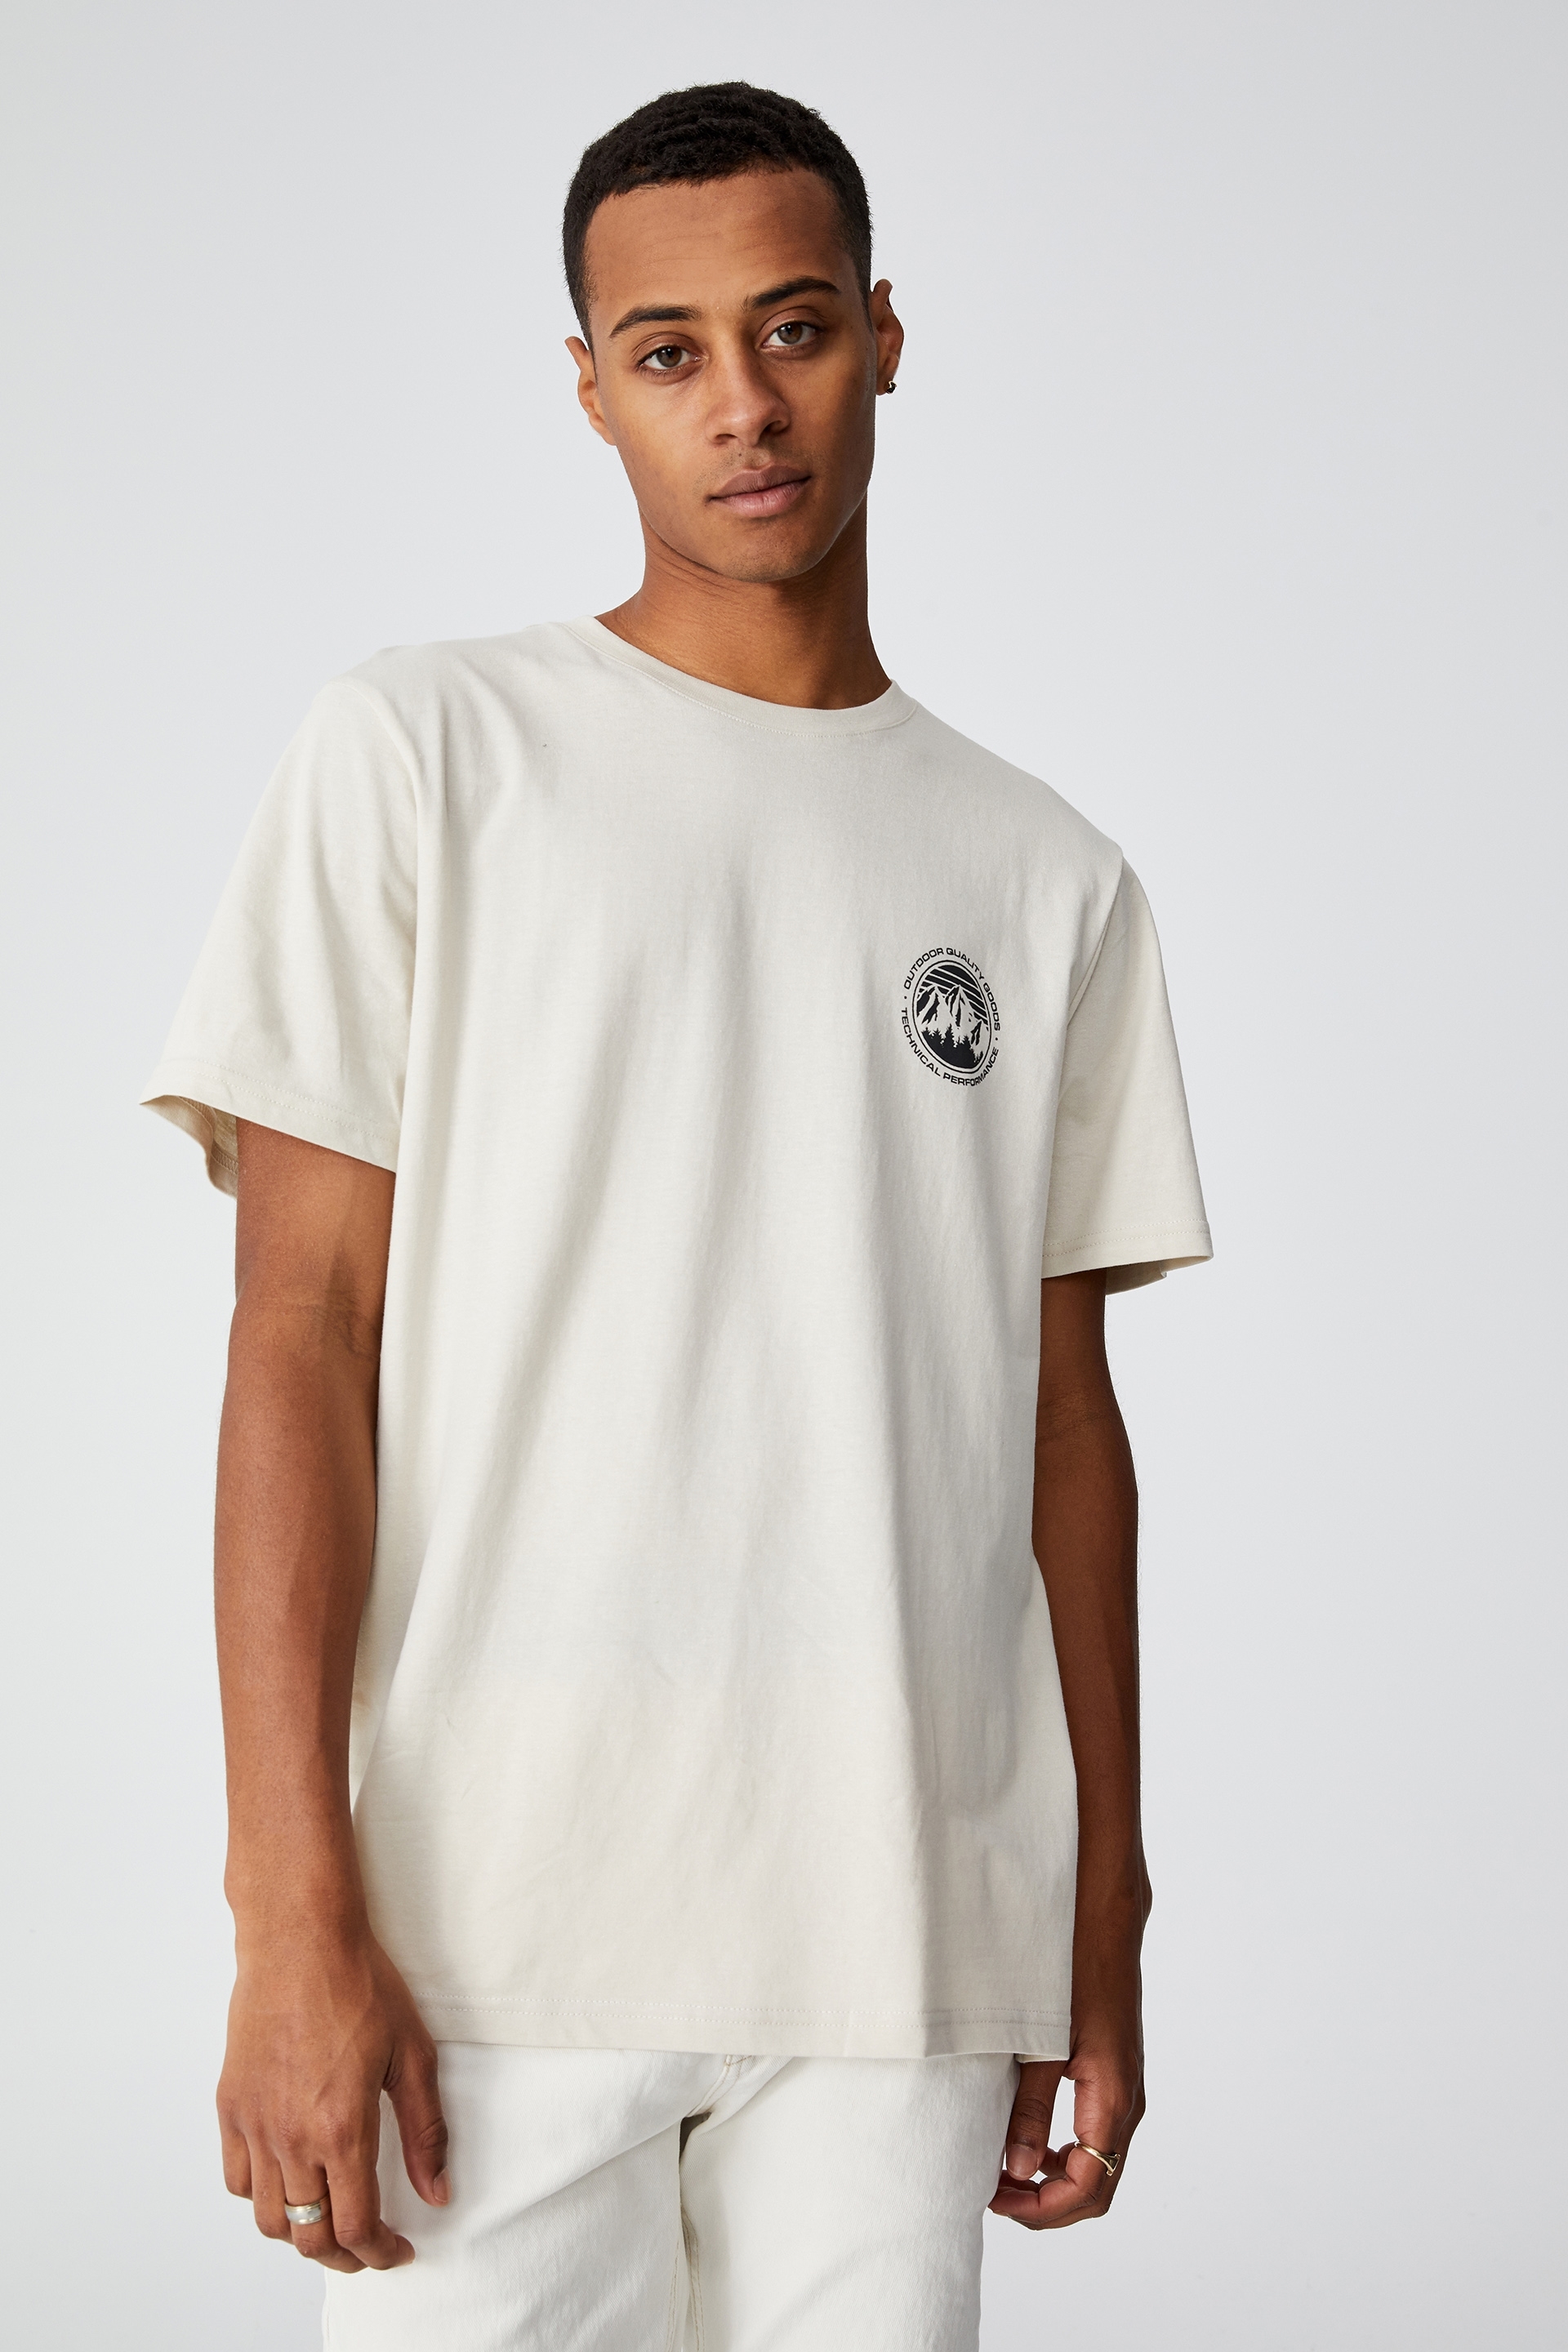 Cotton On Men - Tbar Souvenir T-Shirt - Bone/outdoor quality goods